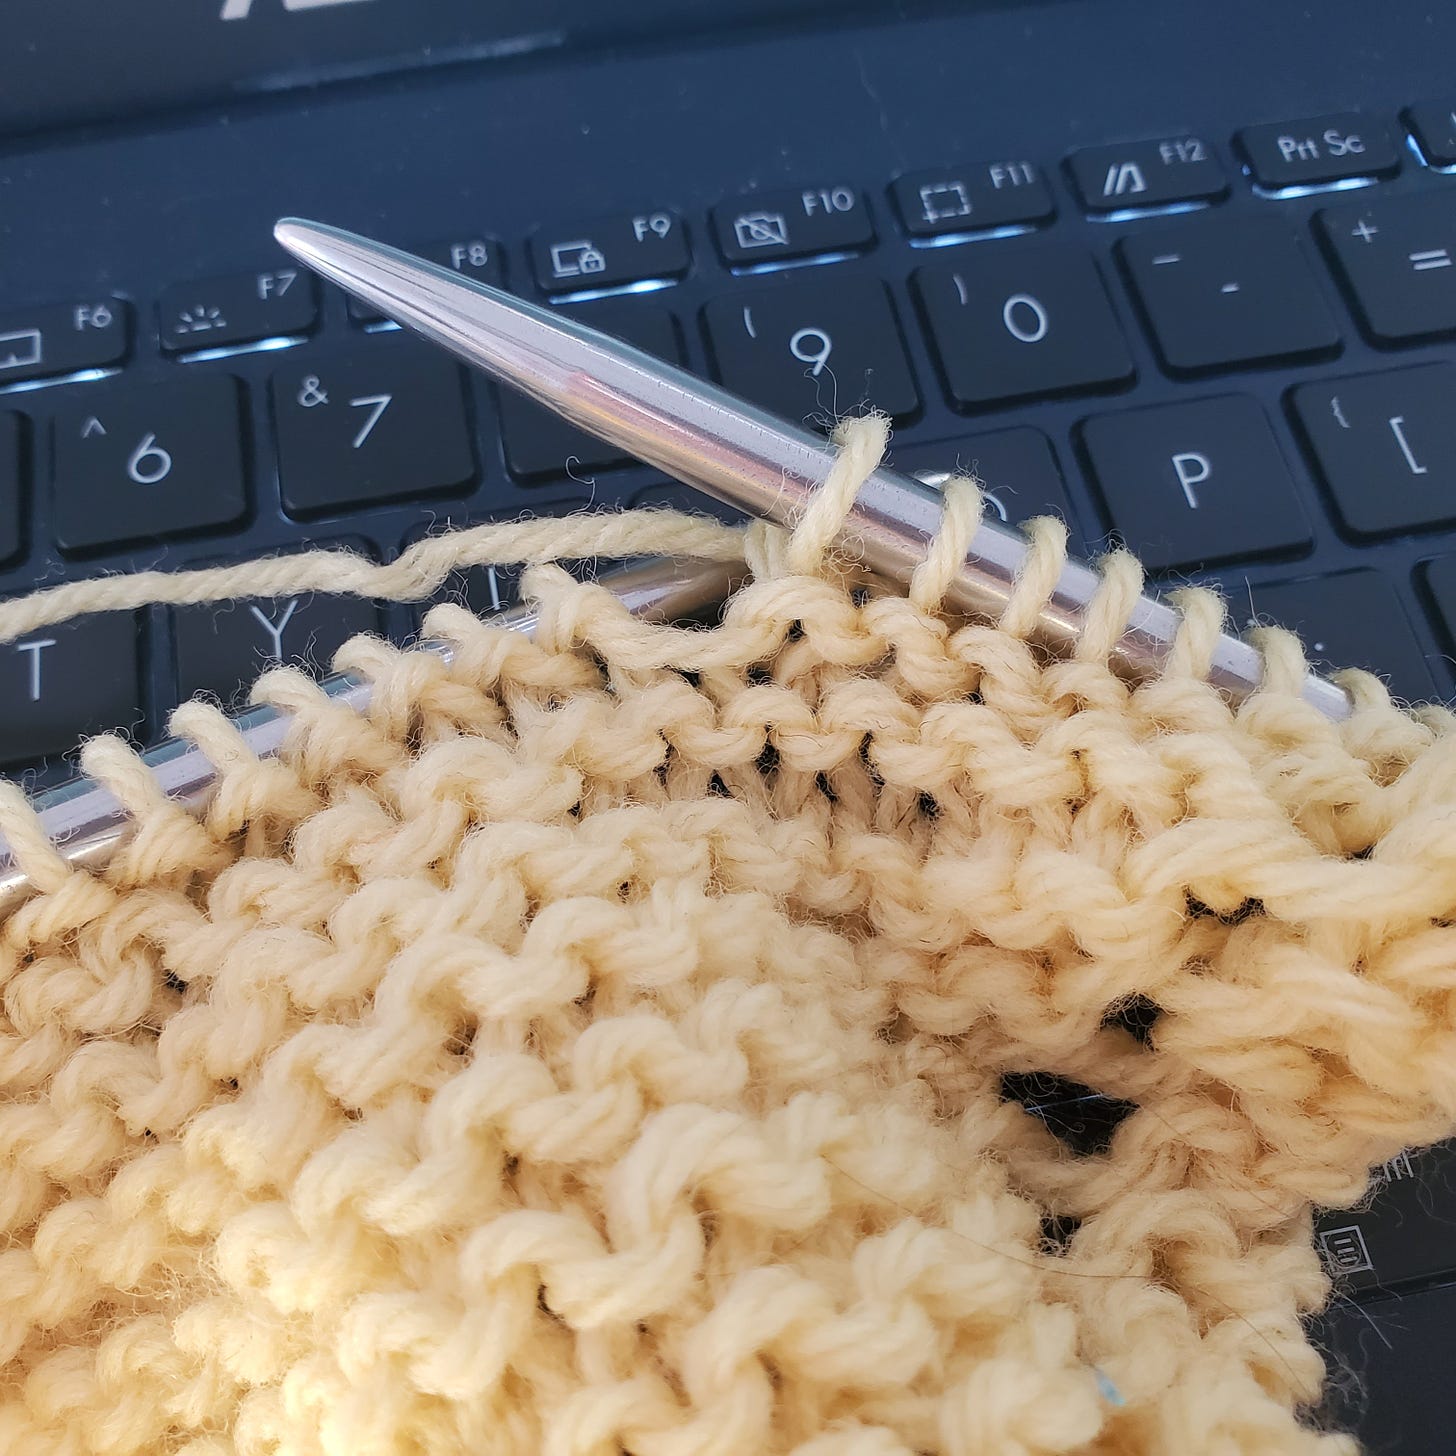 Pale yellow yarn knit into a big garter stitch swatch with metallic circular knitting needles, on a black laptop keyboard